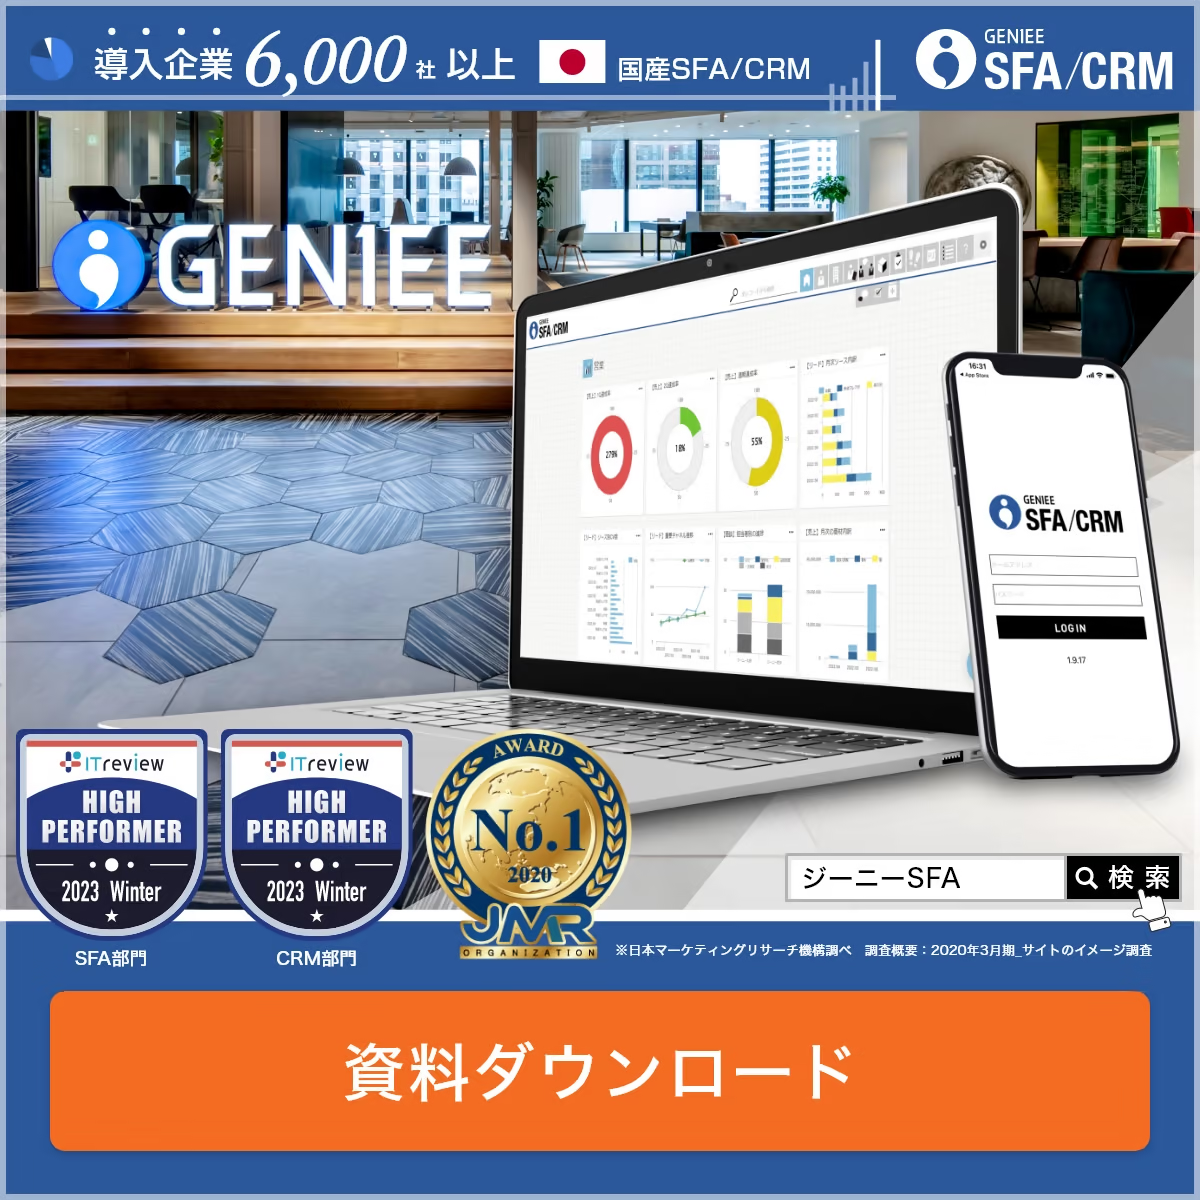 GENIEE SFA/CRM 資料ダウンロード